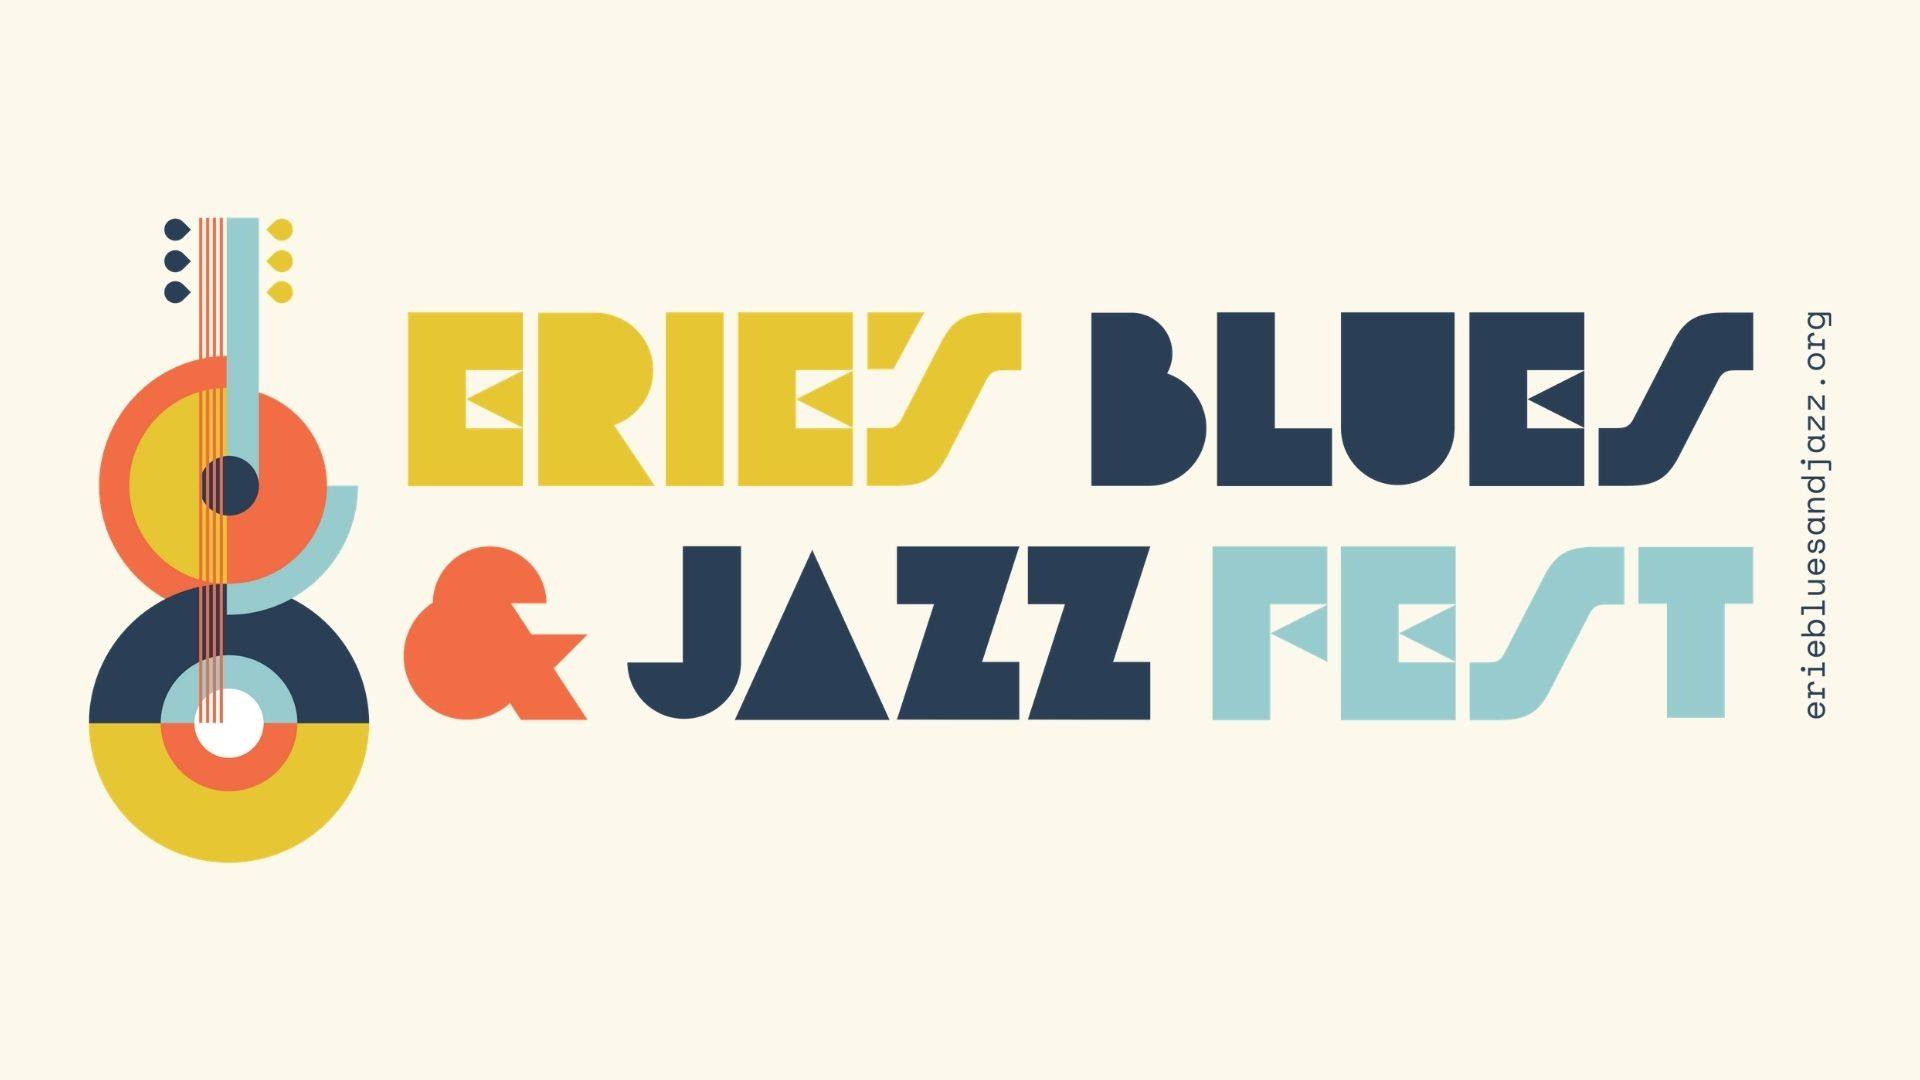 Erie's Blues & Jazz Festival Live Broadcast